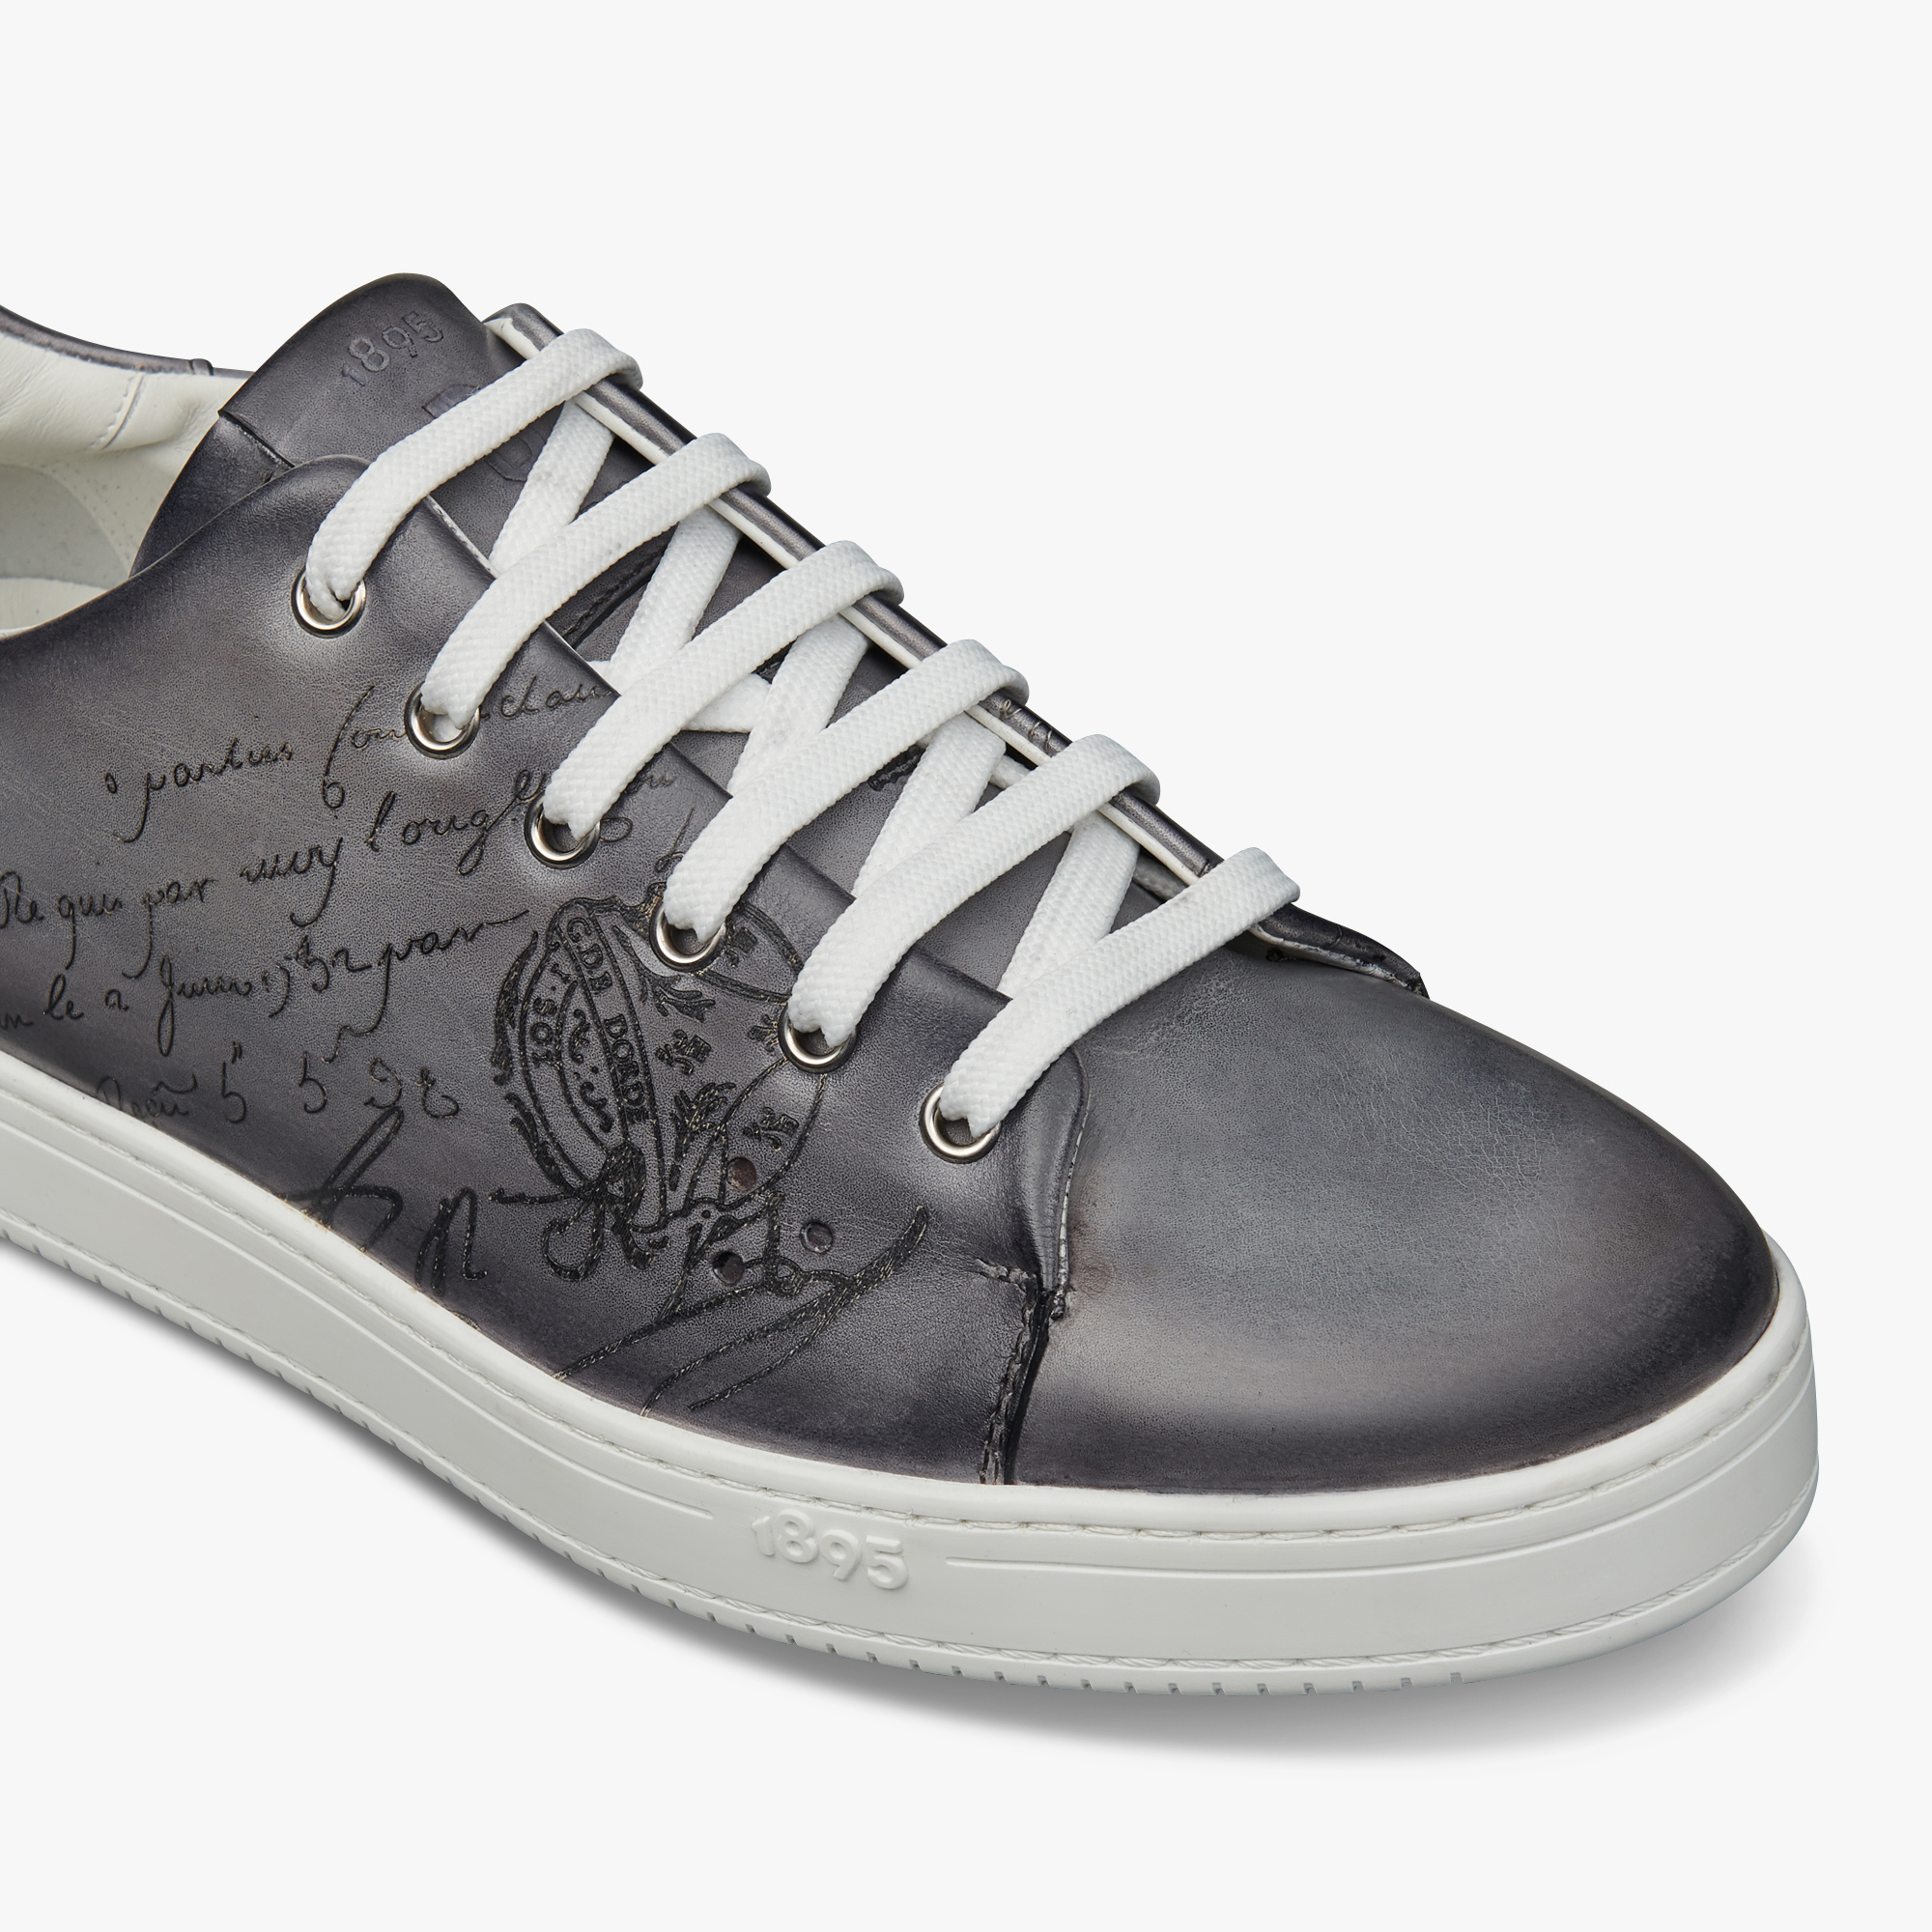 ECKO New Men’s Daim Low Canvas Shoes Plimsoll Trainers Sneakers Blue Black Grey 